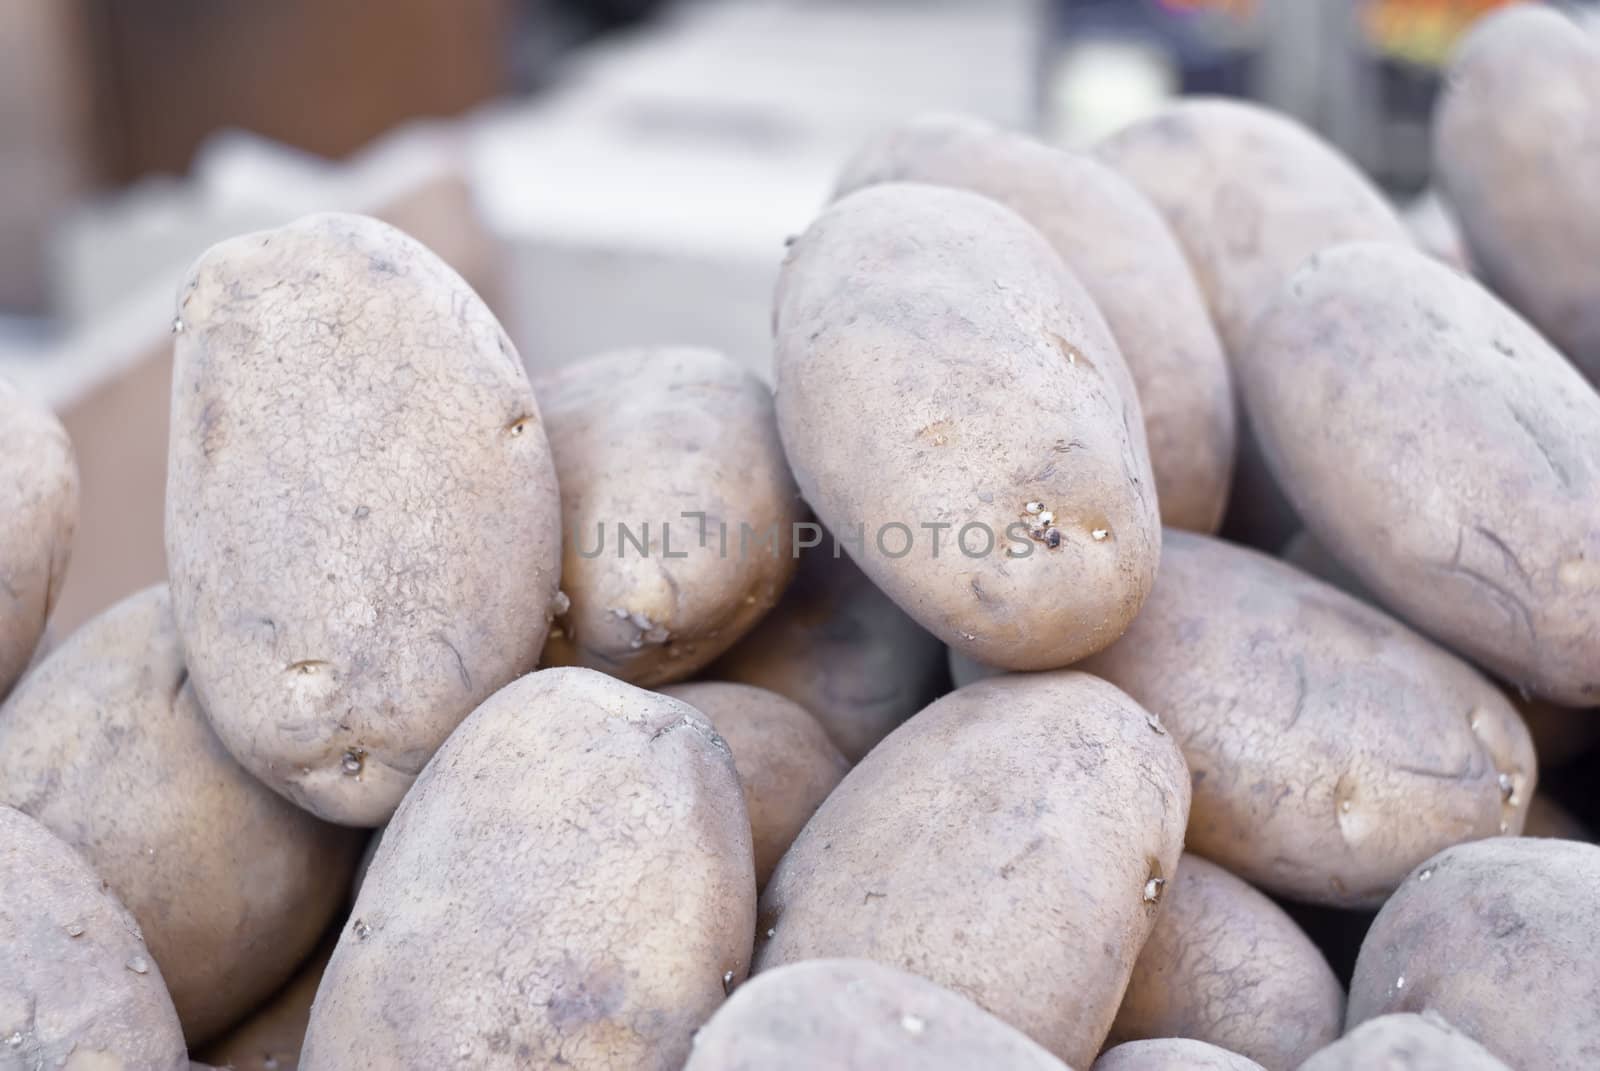 Old potatoes by gandolfocannatella